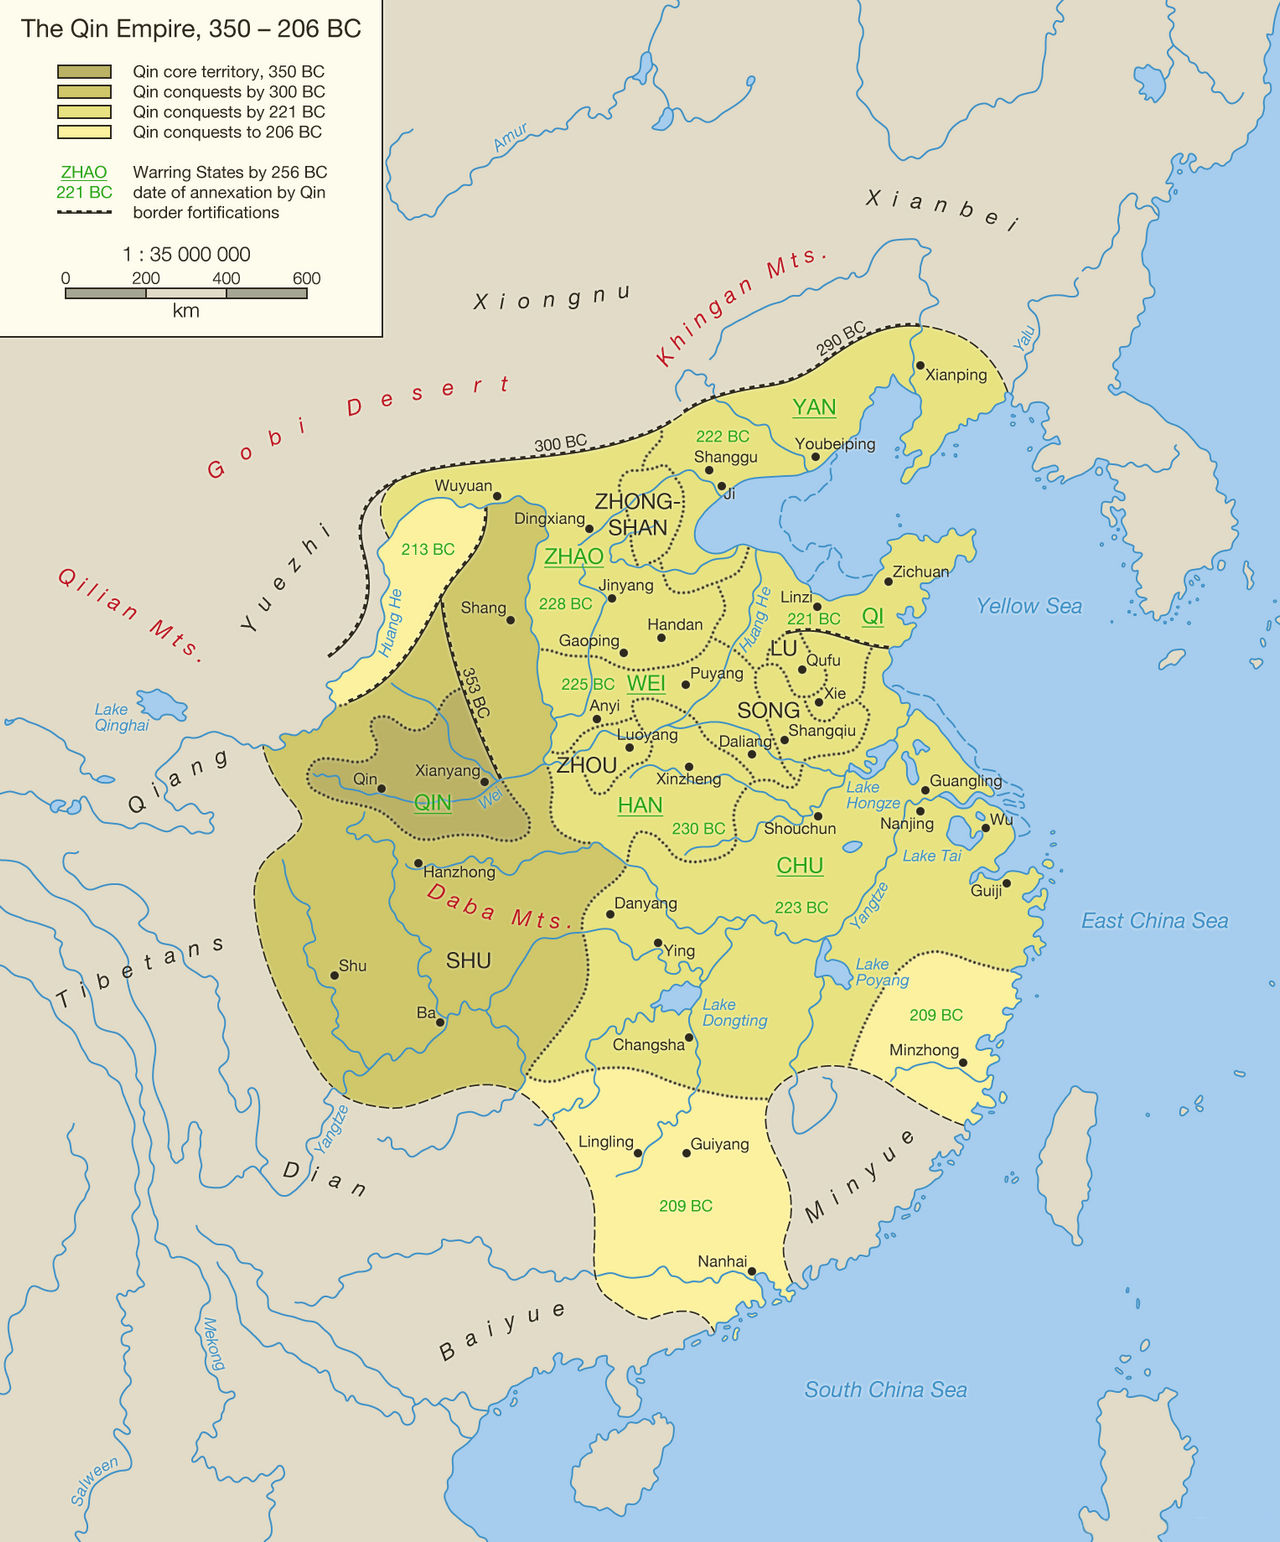 The Qin Empire, 350 - 206 BC